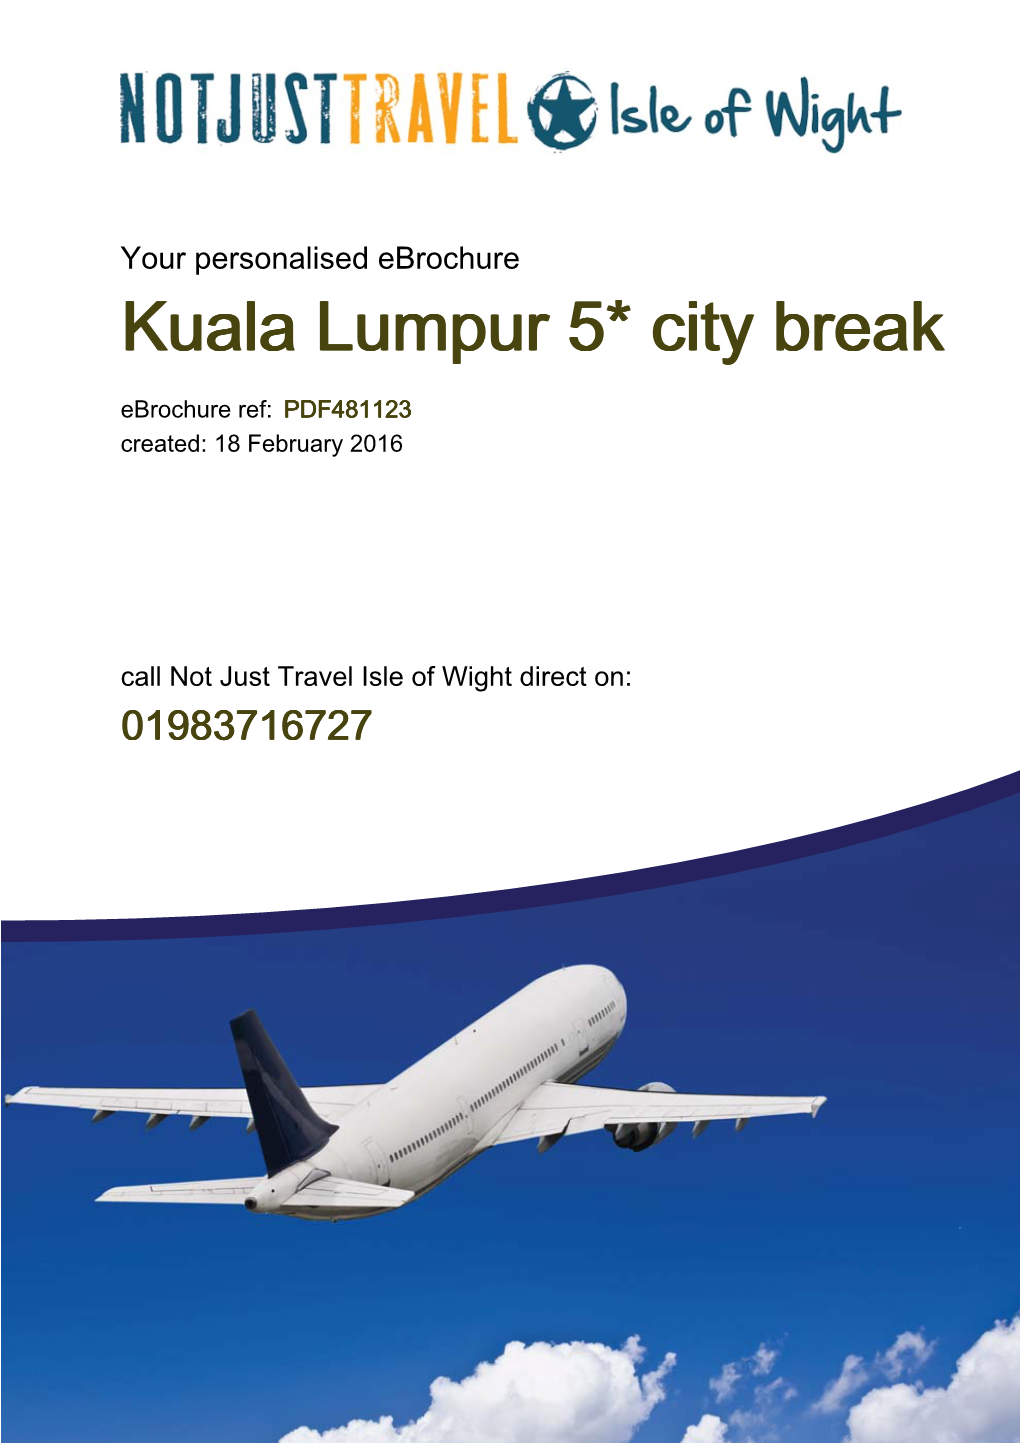 Kuala Lumpur 5* City Break Ebrochure Ref: PDF481123 Call Not Just Travel Isle of Wight Direct on 01983716727